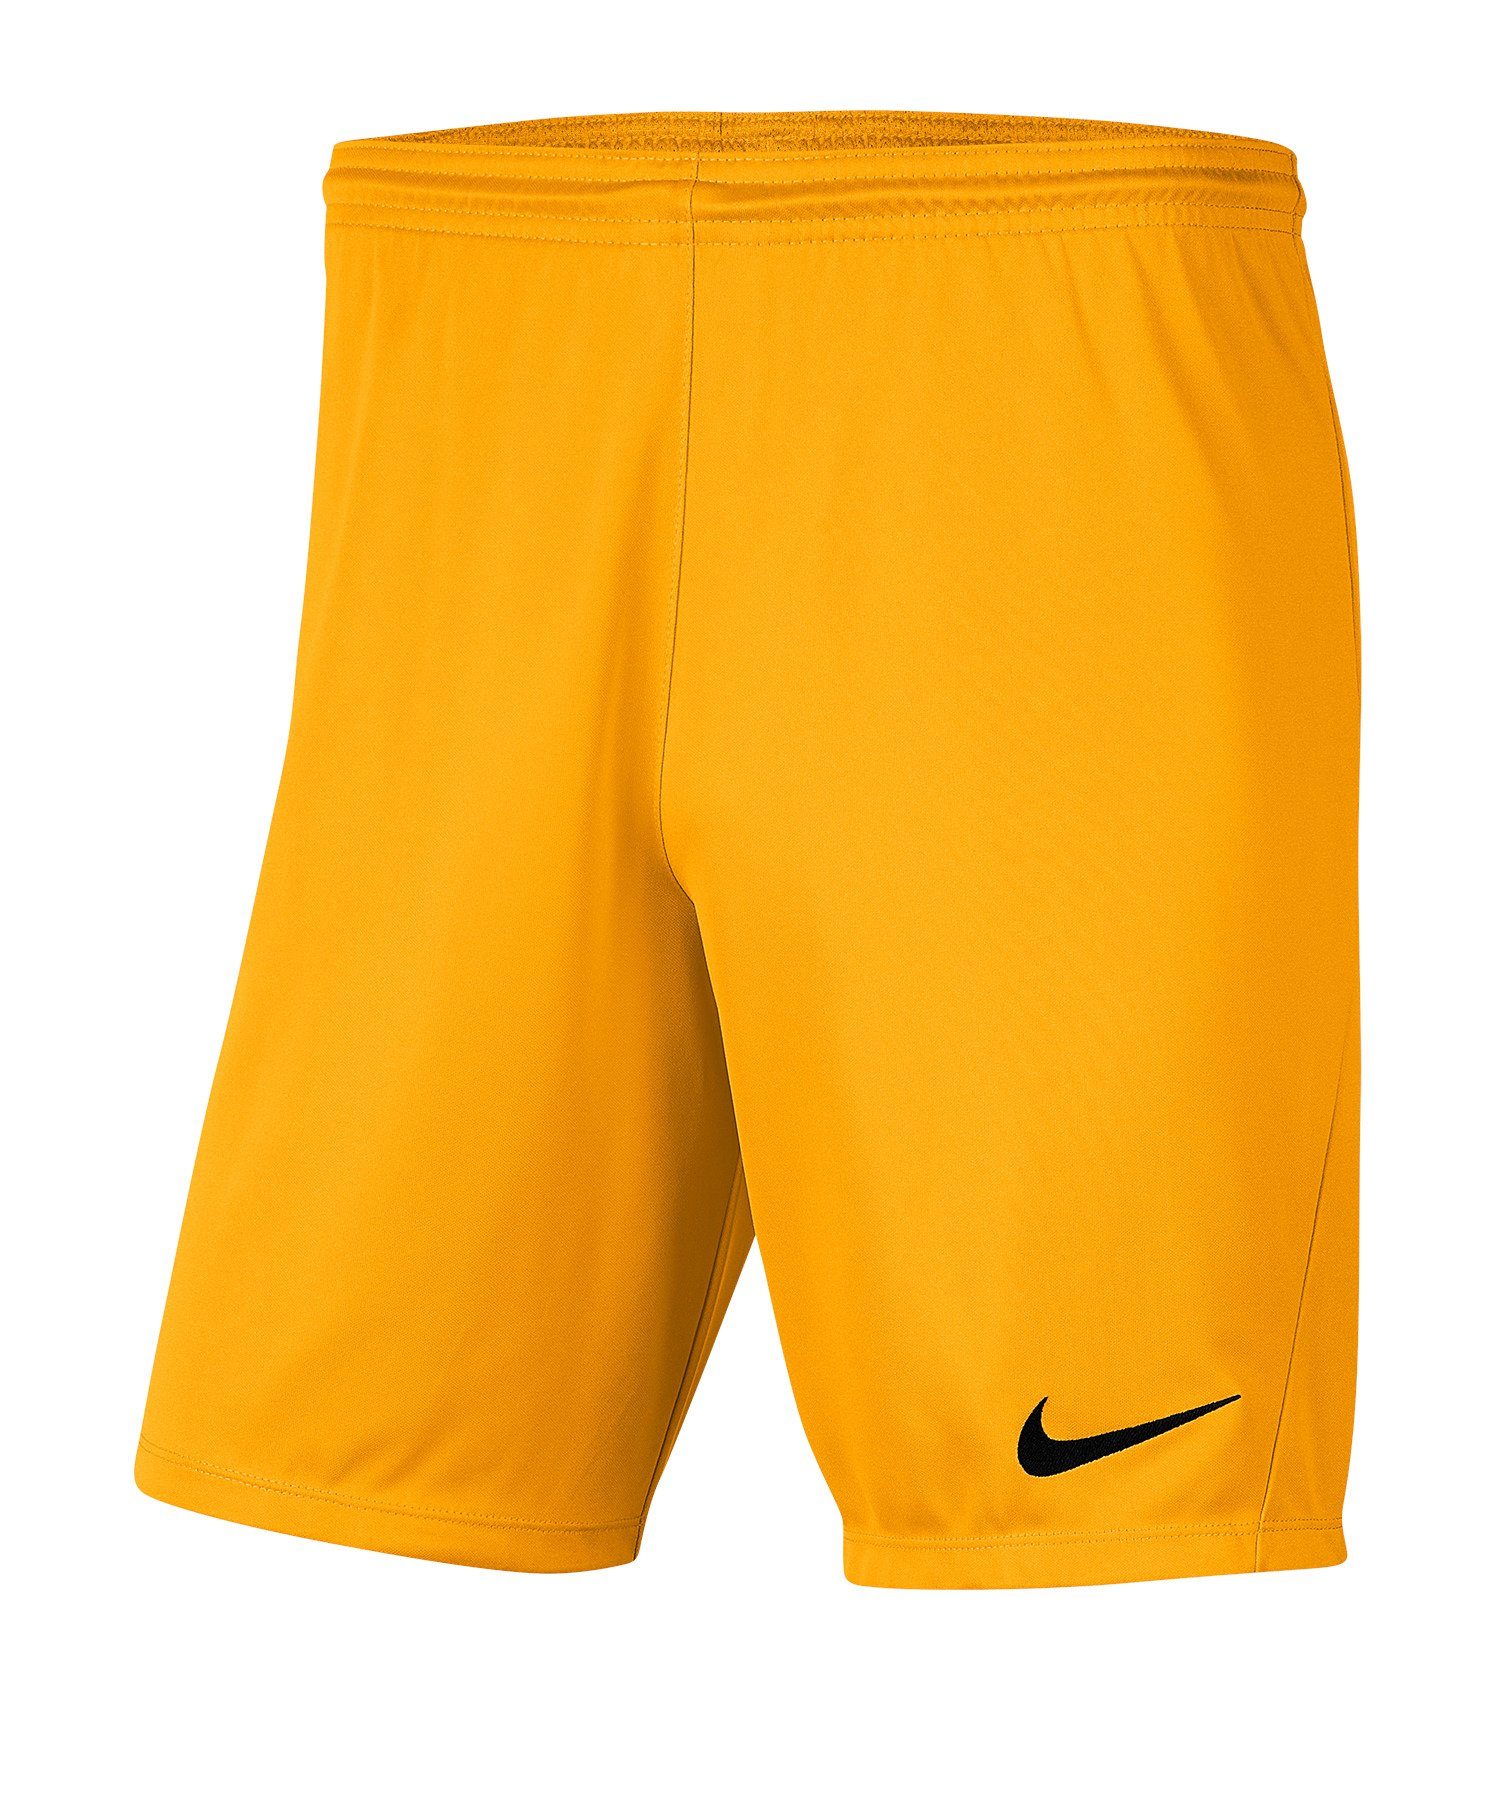 Nike Sporthose Park III Short orangeschwarz | Turnhosen